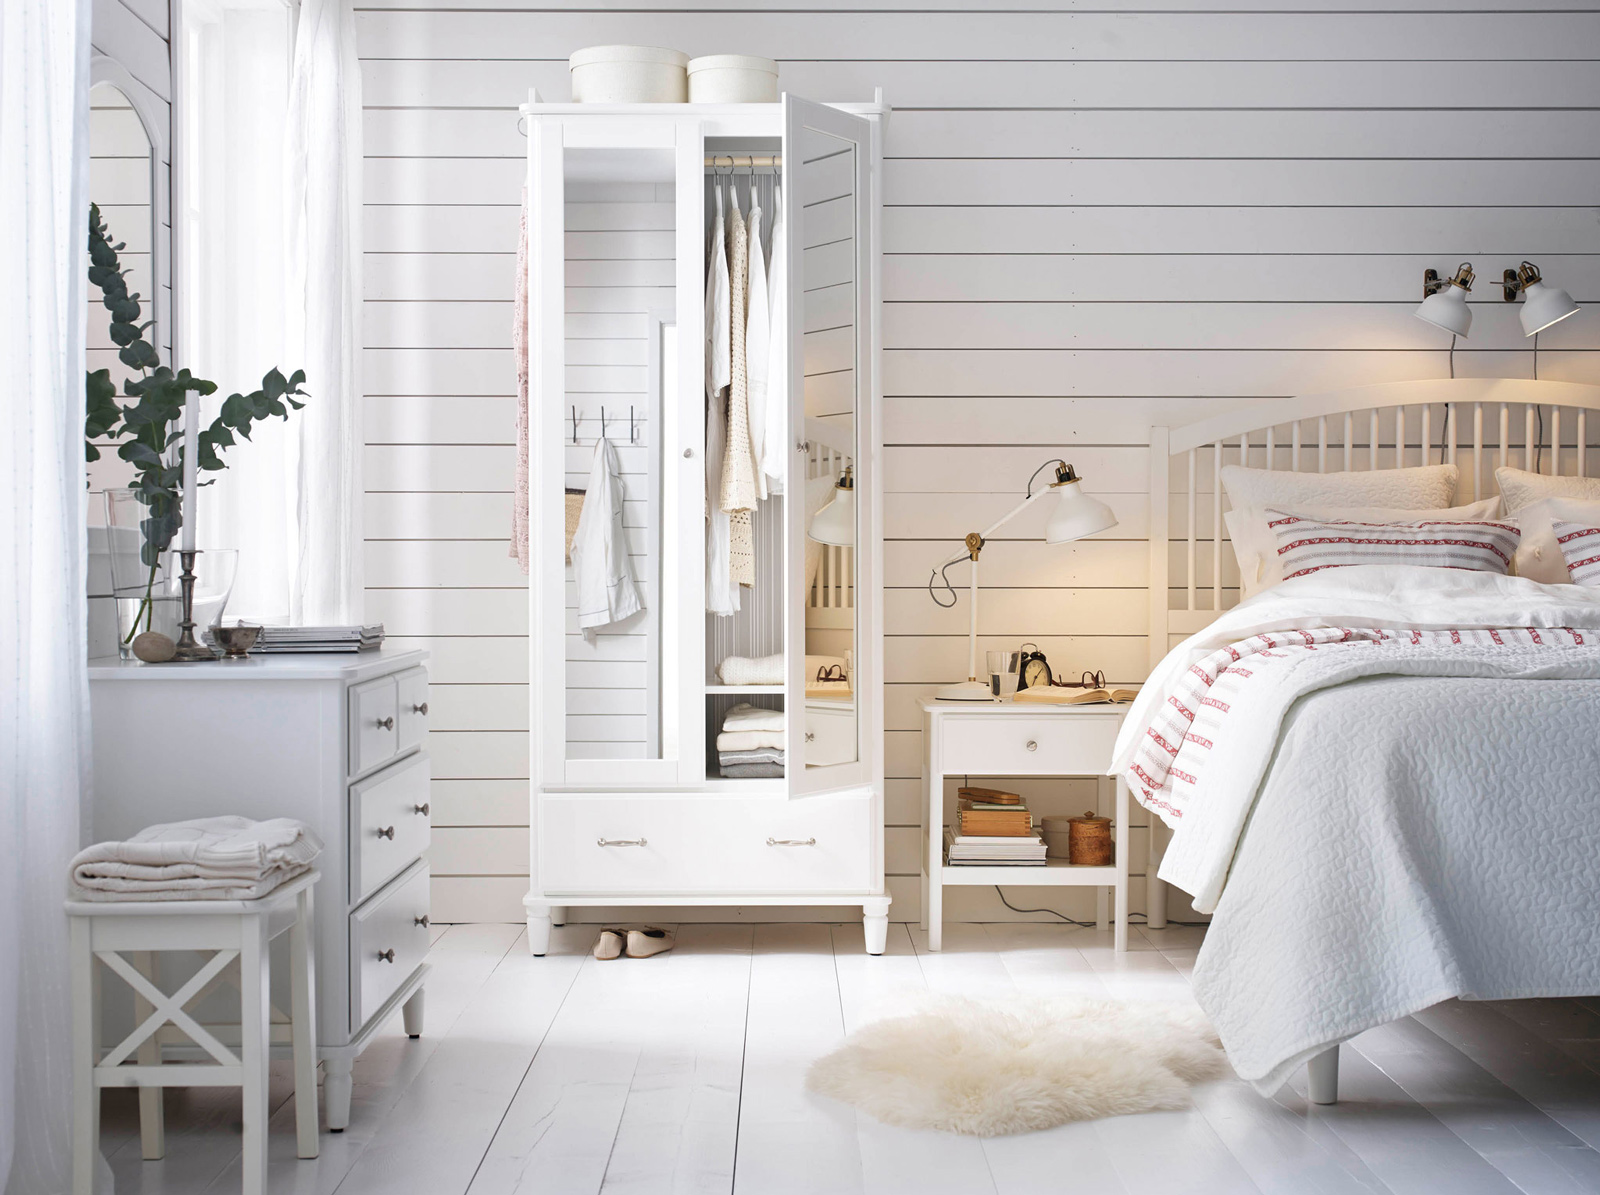 White Bedroom Decor - Check 5 Wondrous White Bedroom Ideas